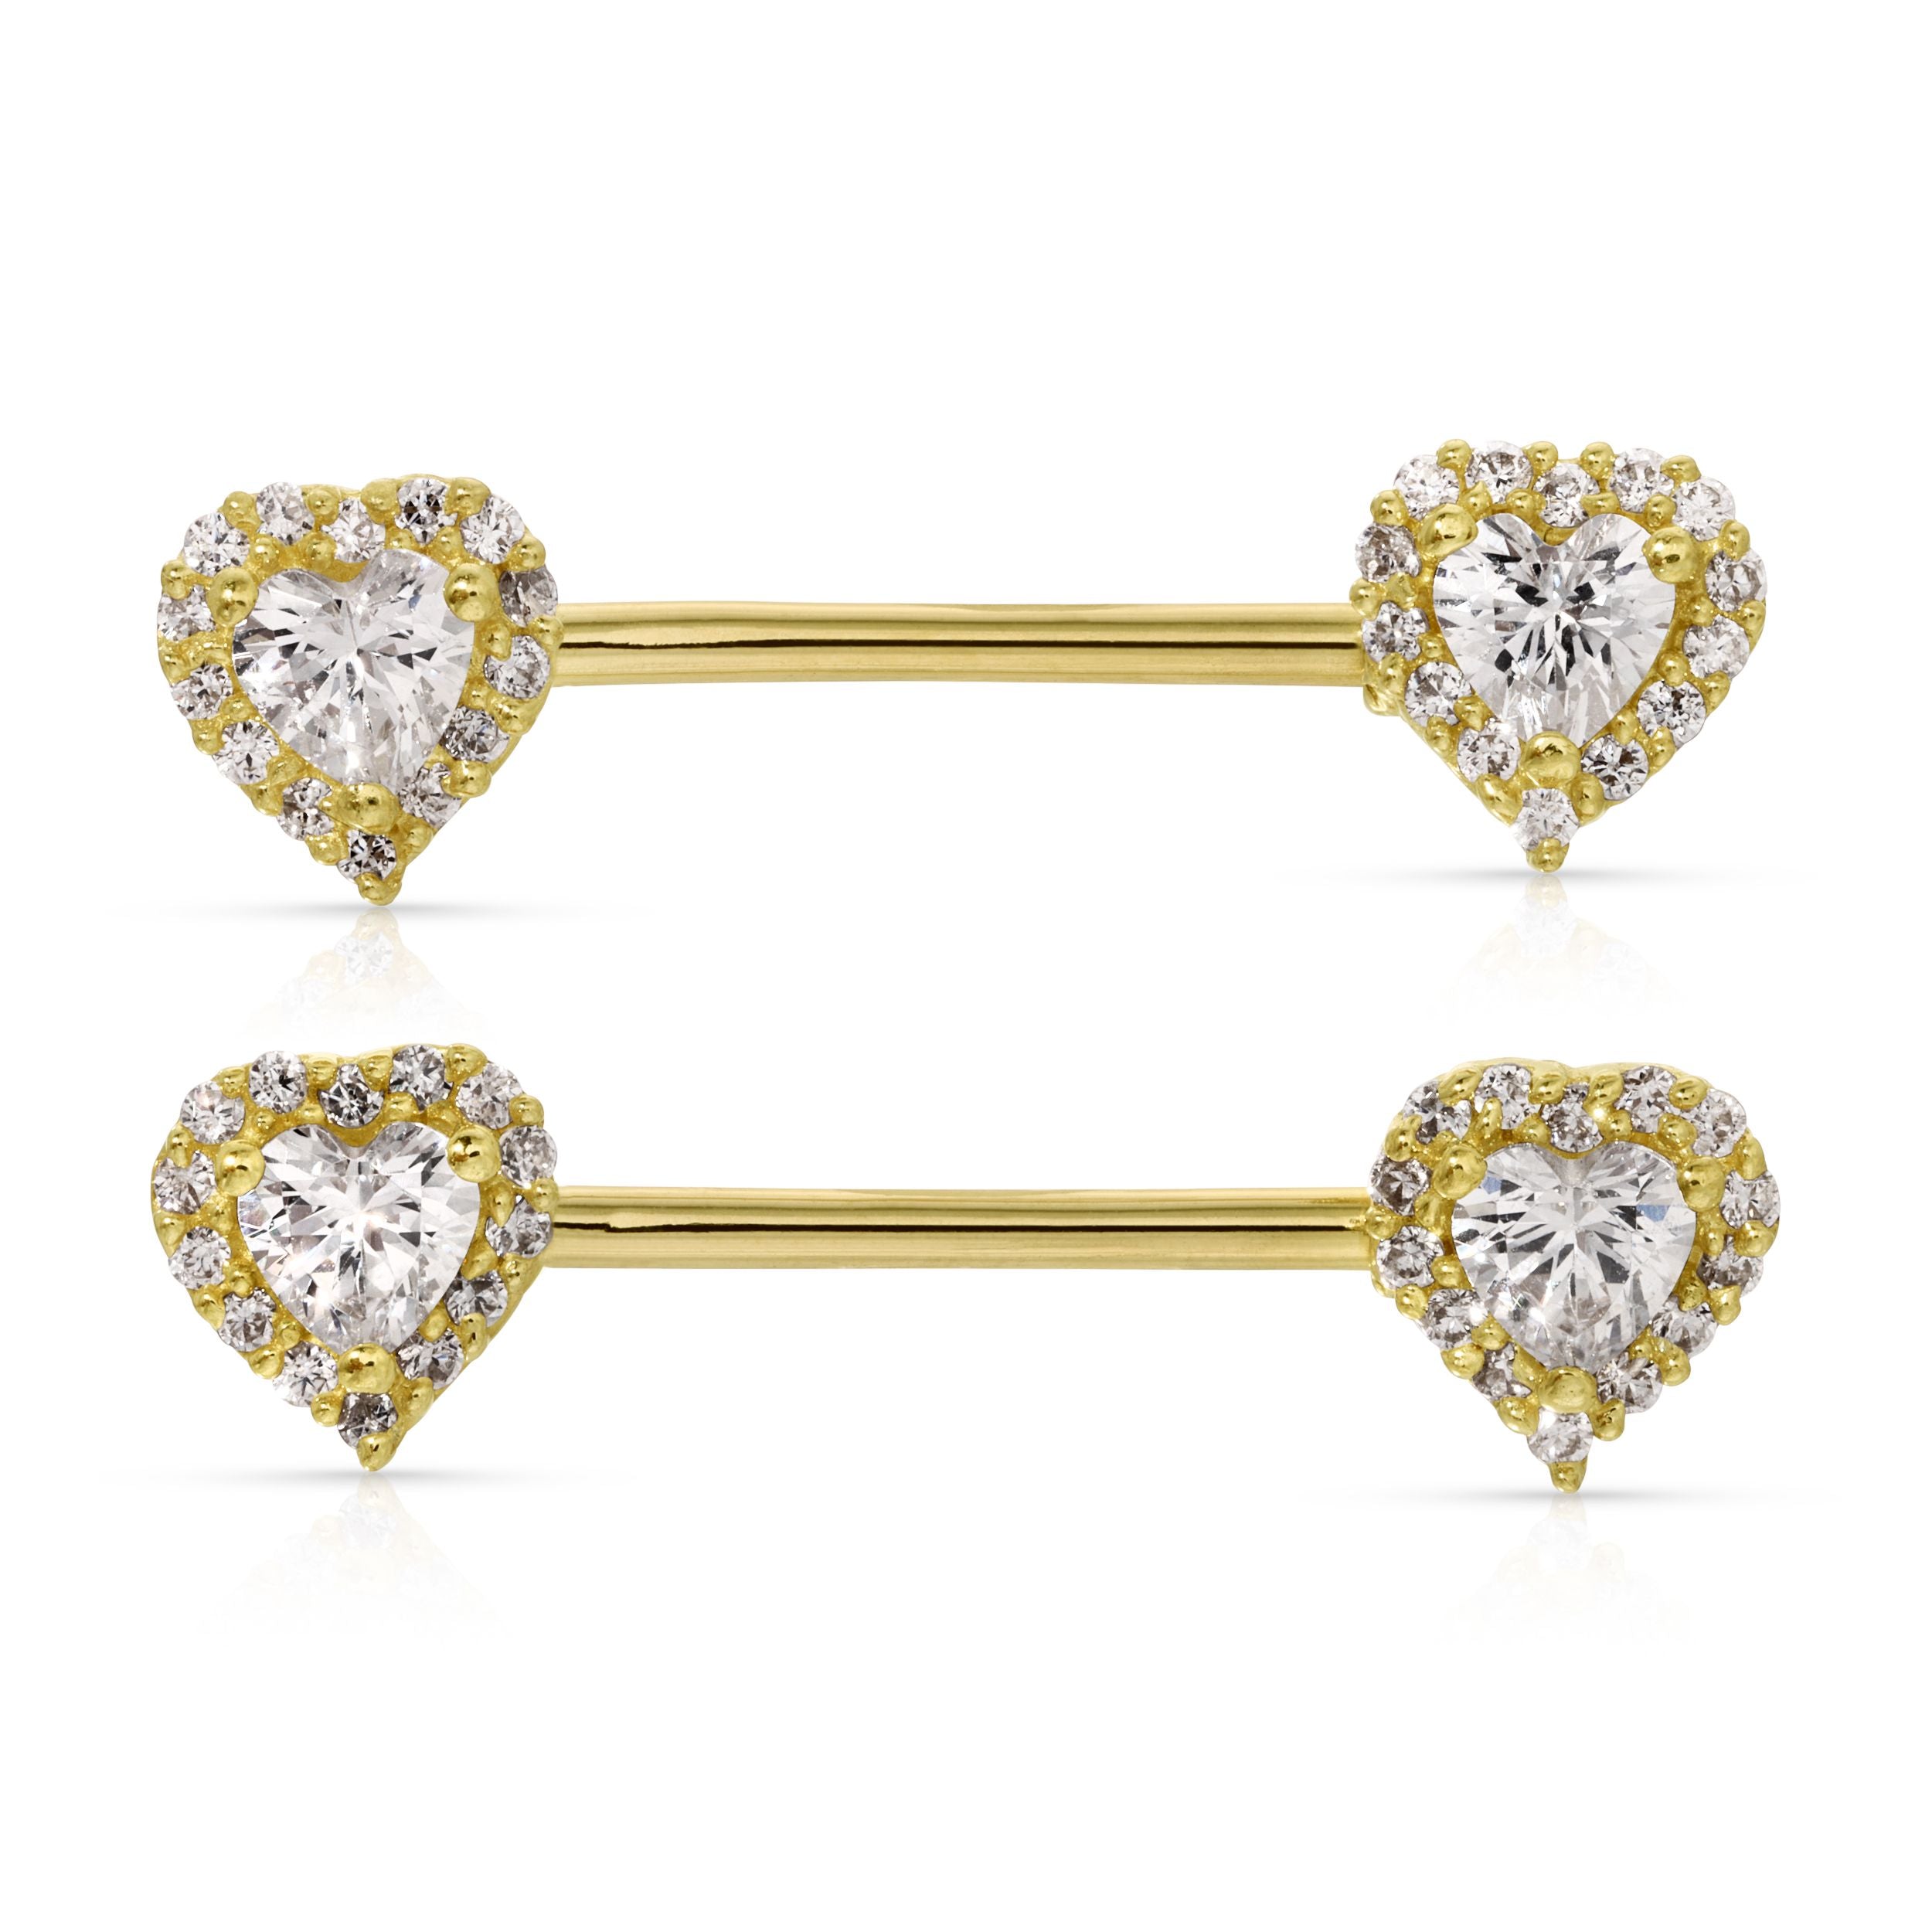 Baroque Filigree Style Diamond Nipple Ring | HX Jewelry